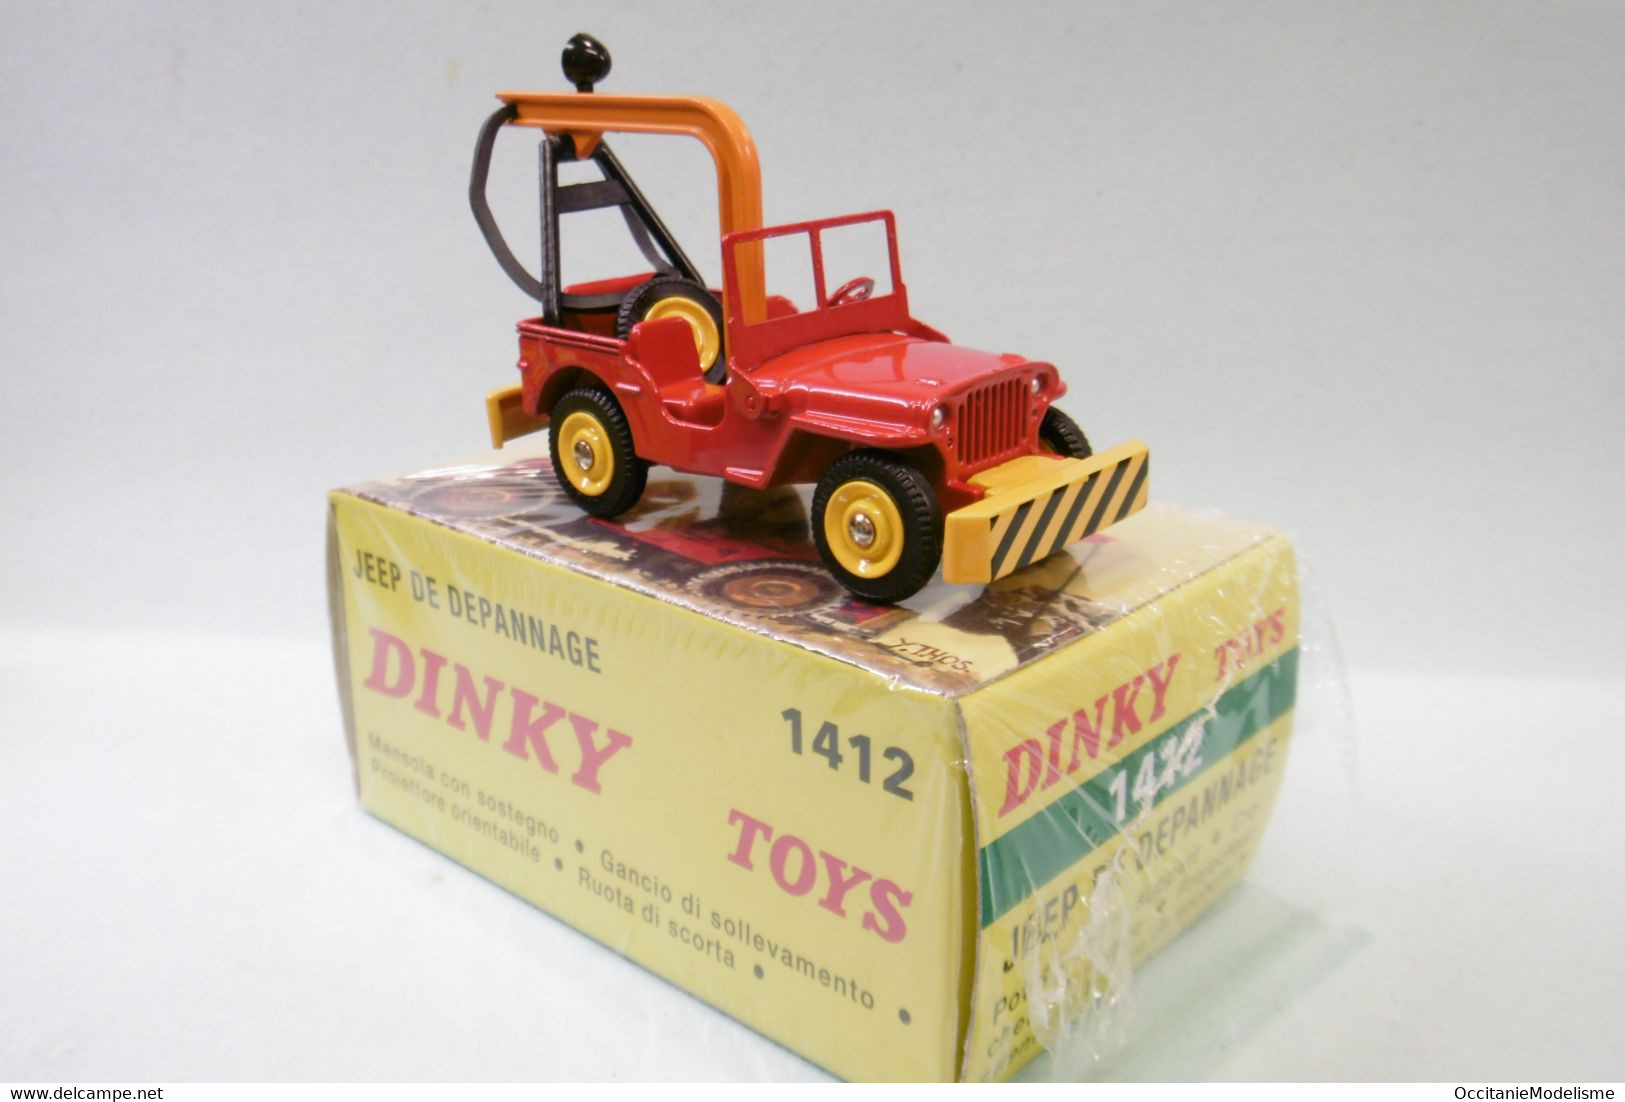 Dinky Toys / Atlas - JEEP DE DEPANNAGE Rouge Réf. 1412 Neuf NBO 1/43 - Dinky